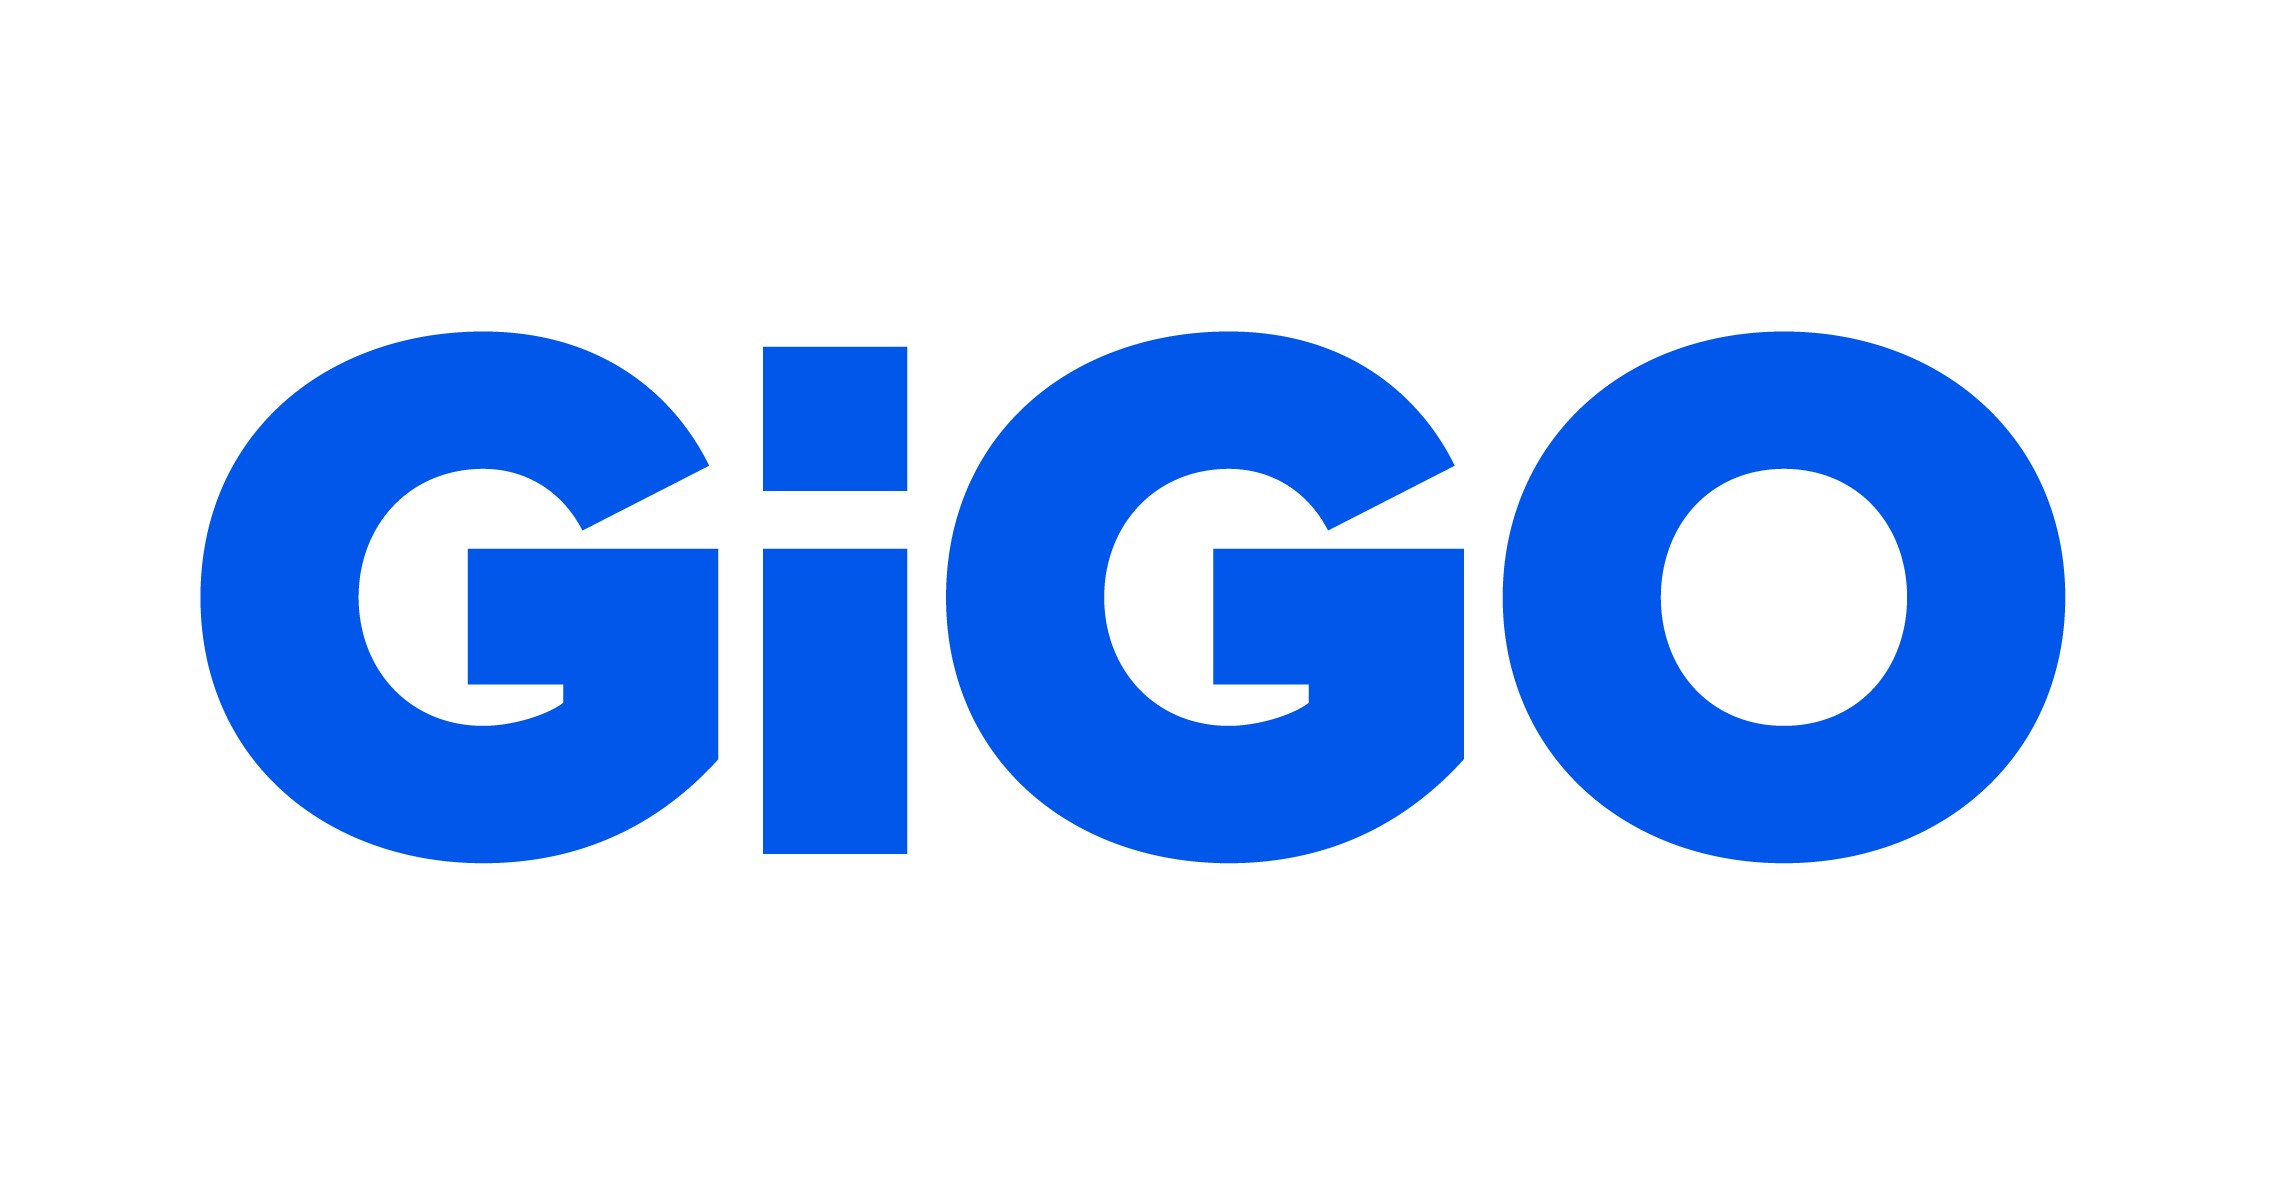 Gigo 秋葉原4号館 22年9月25日 日 閉館のお知らせ 株式会社genda Gigo Entertainmentのプレスリリース